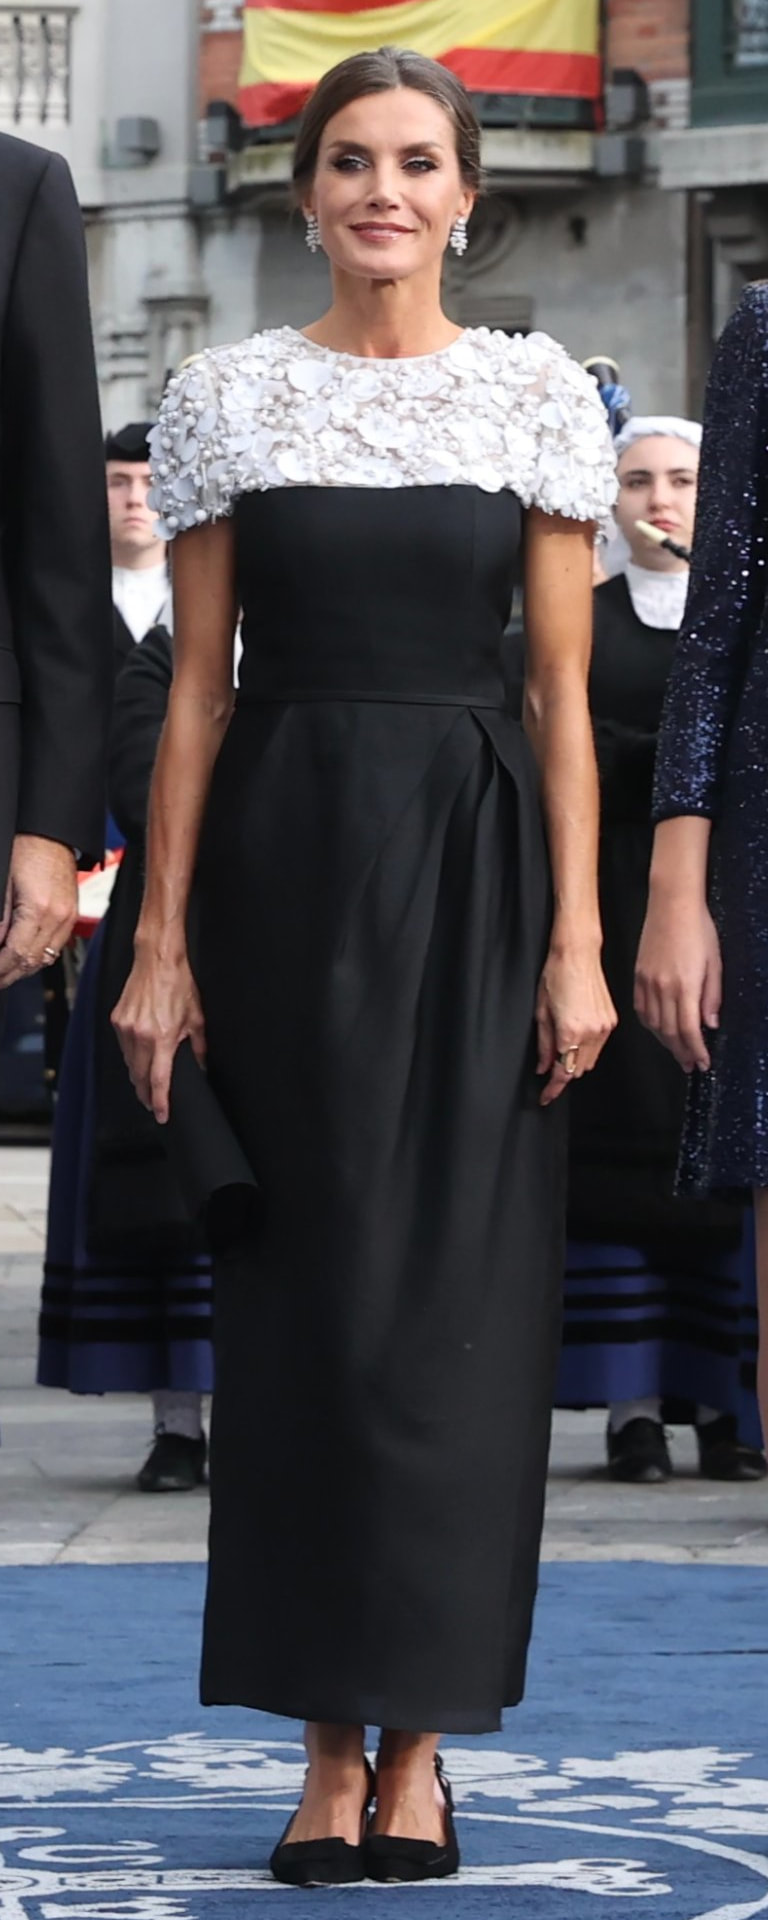 Carolina Herrera Black & White Embellished Yoke Dress​ as seen on Queen Letizia.